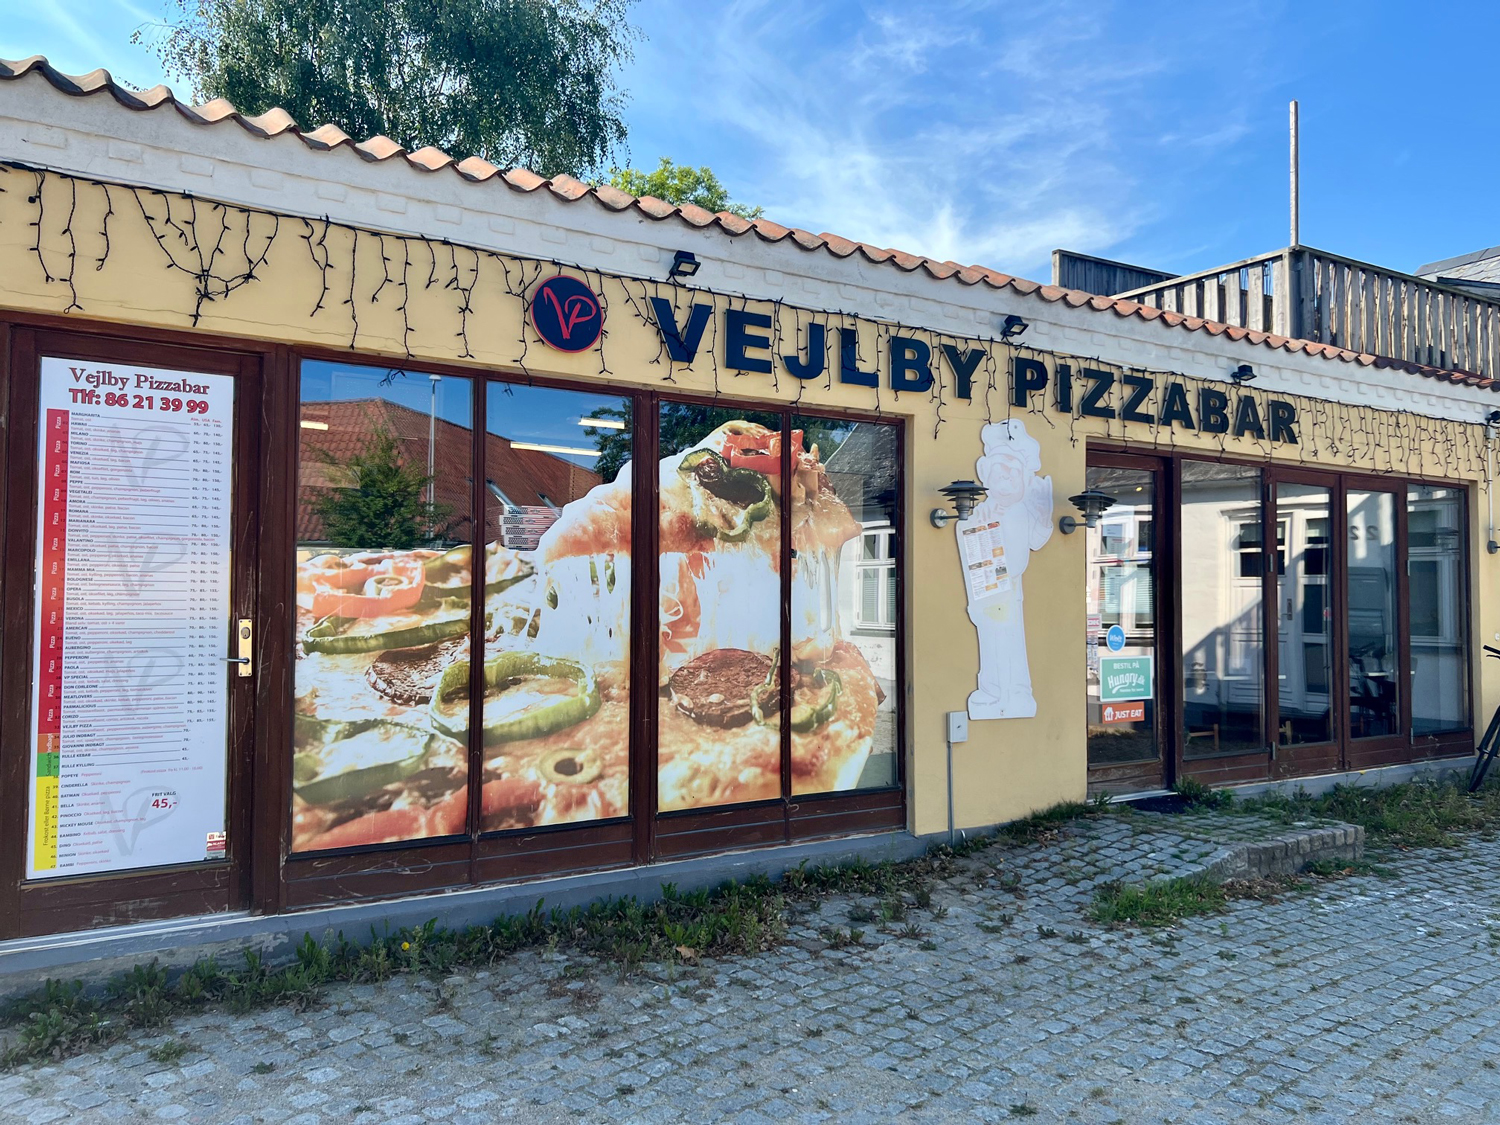 Vejlby Pizzabar